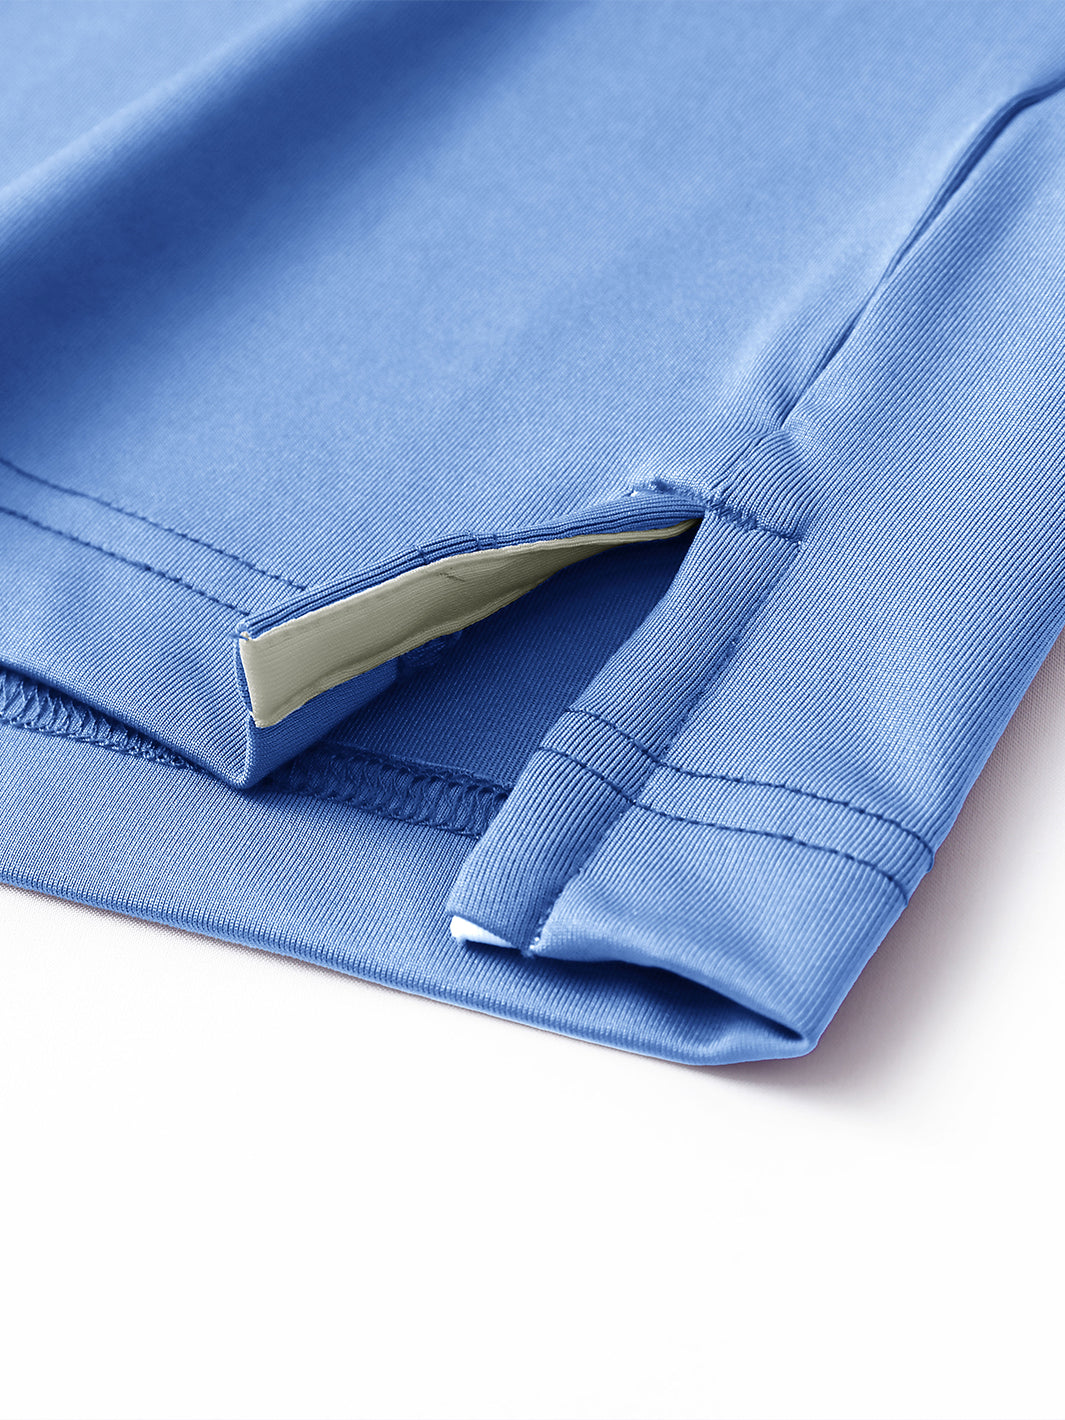 Men's Solid Color Block Patchwork Polo Shirts-Light Blue